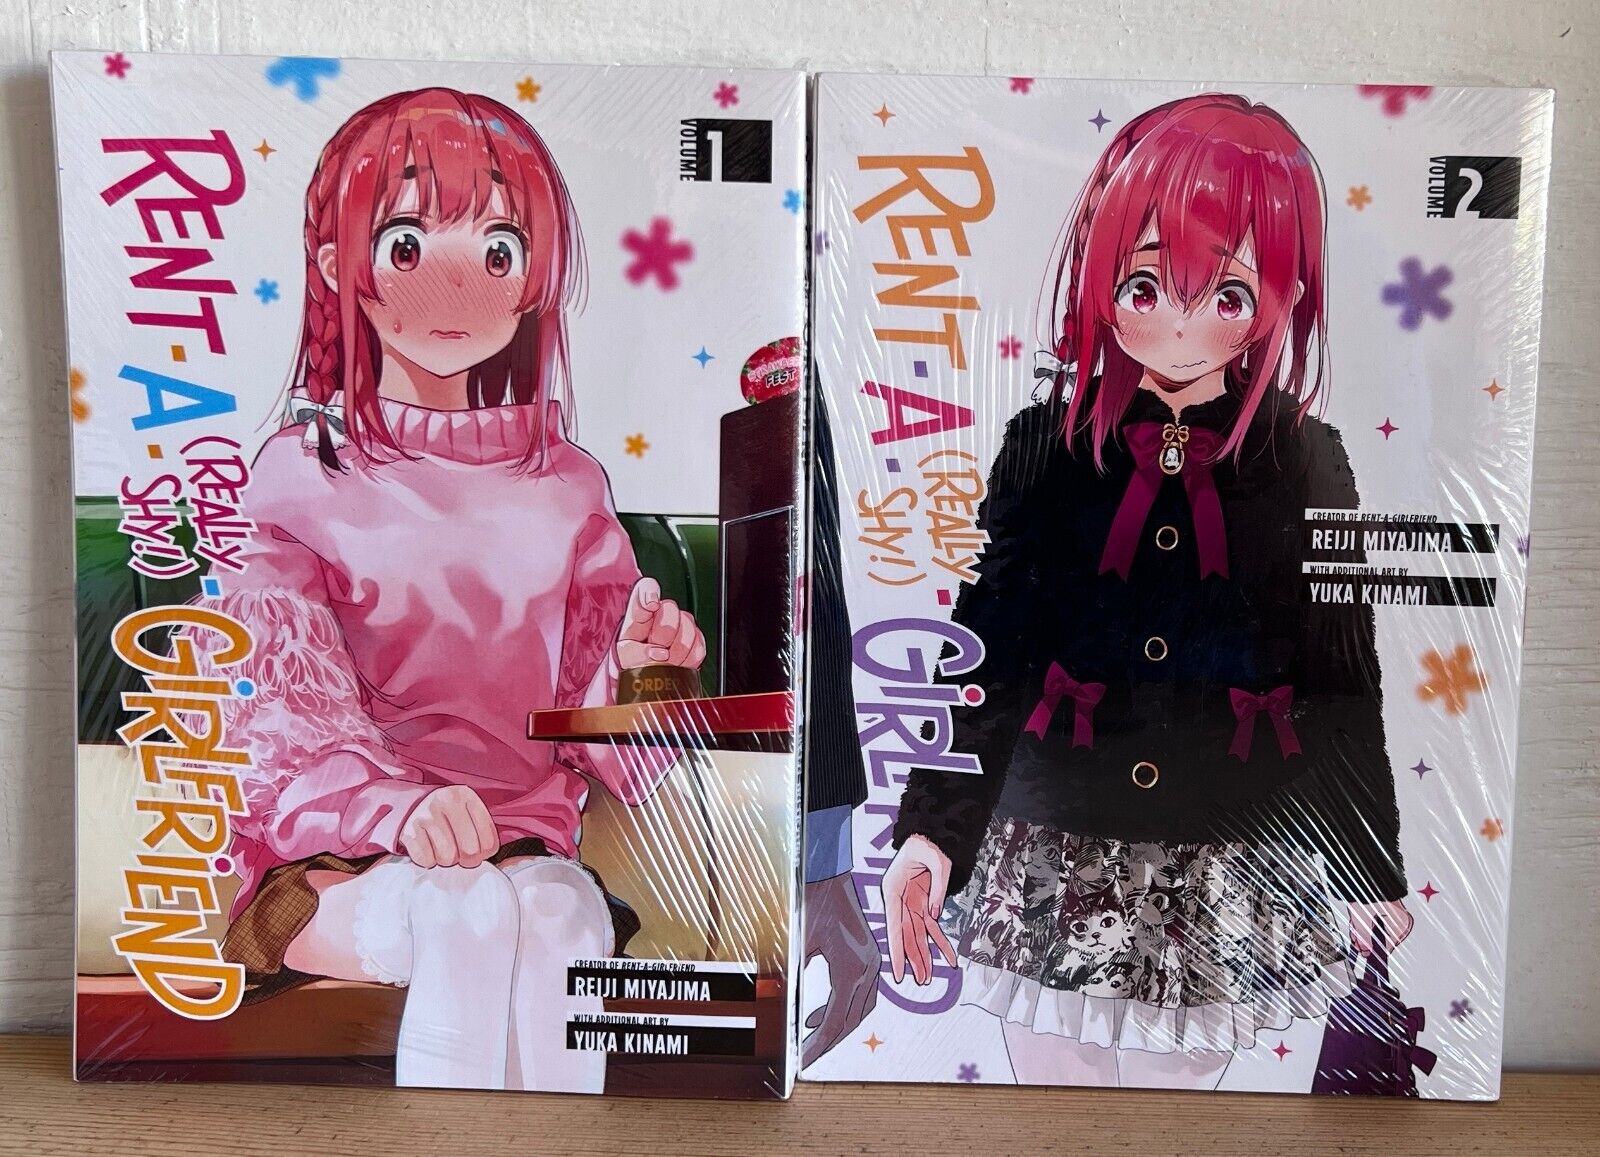 Rent a (really shy) Girlfriend (Vol. 1-3)  English Manga Graphic Novels NEW